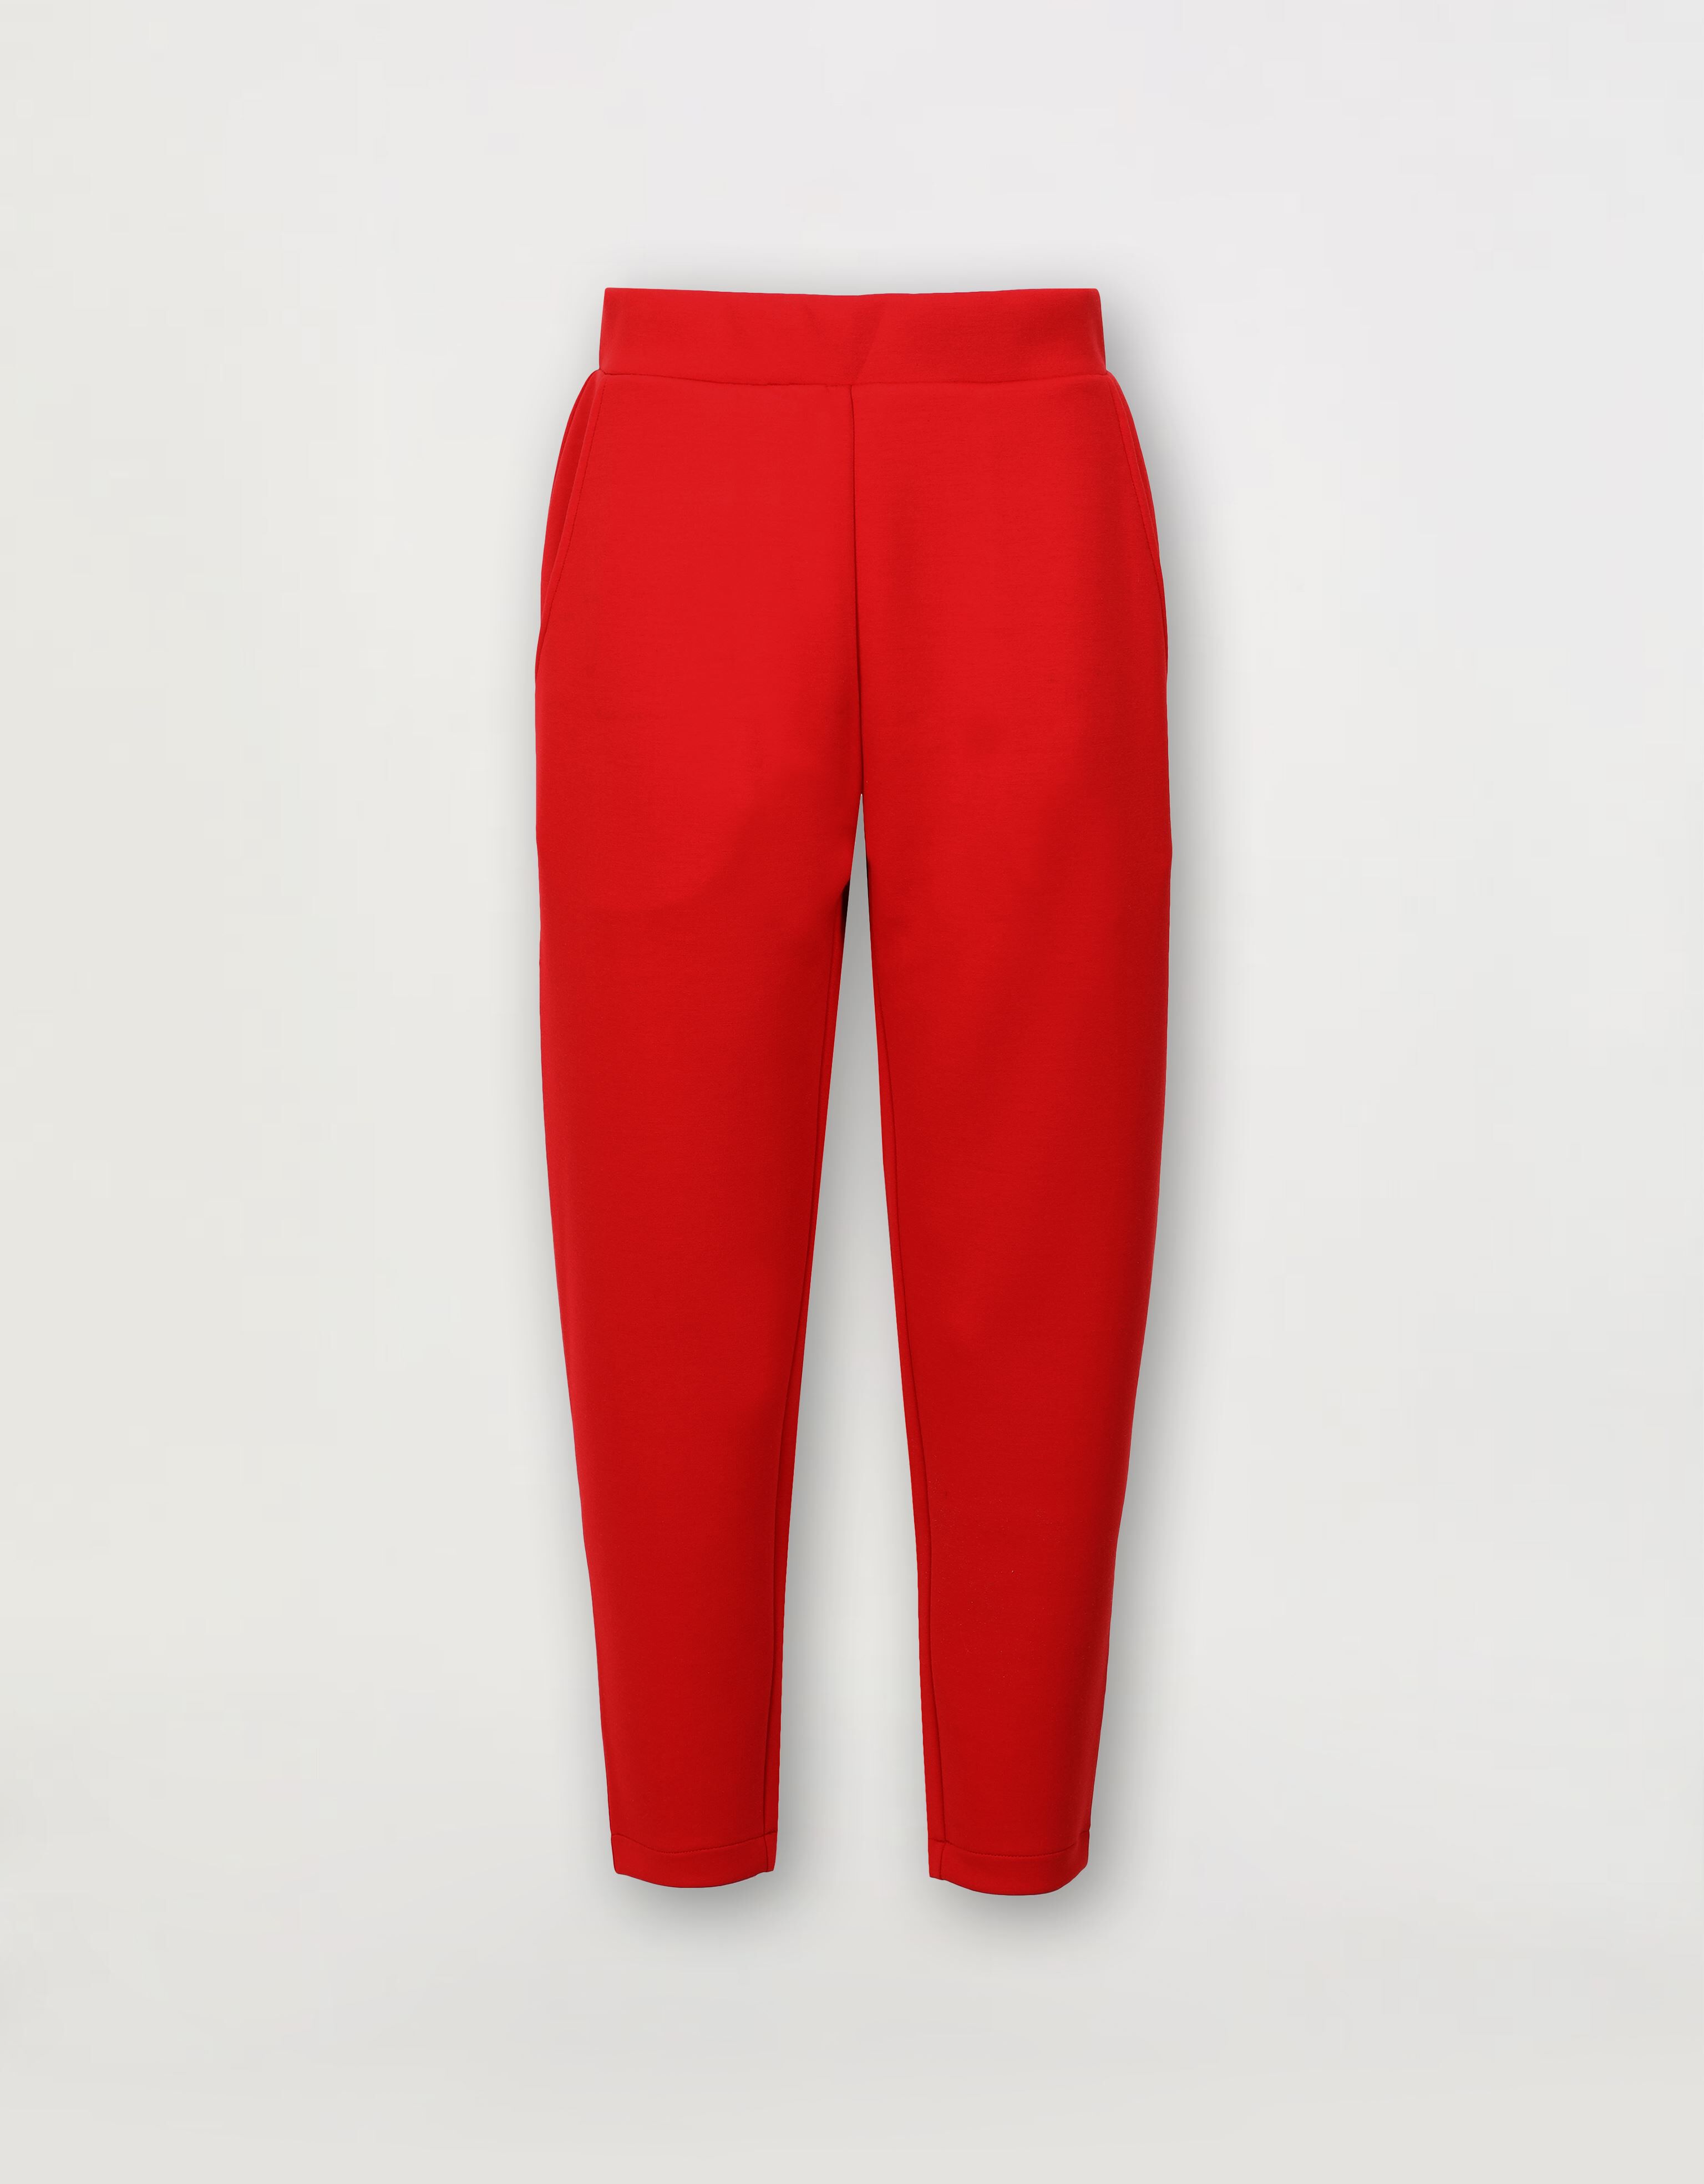 Ferrari Pantalon de jogging femme en tissu réversible Rosso Corsa 46978f